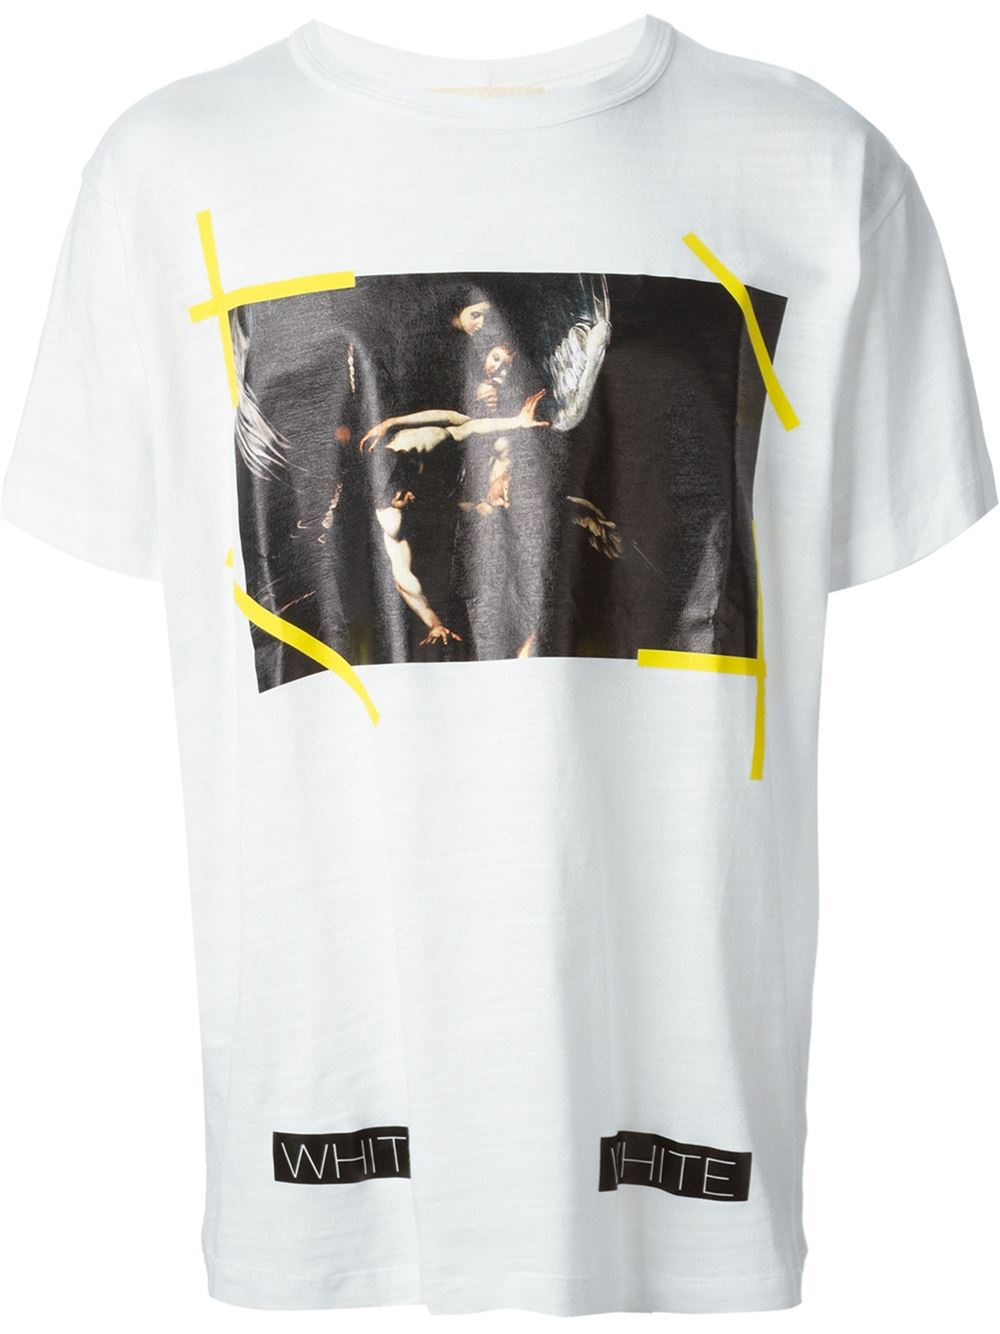 Lyst - Off-White C/O Virgil Abloh Caravaggio-Print T-Shirt in White for Men